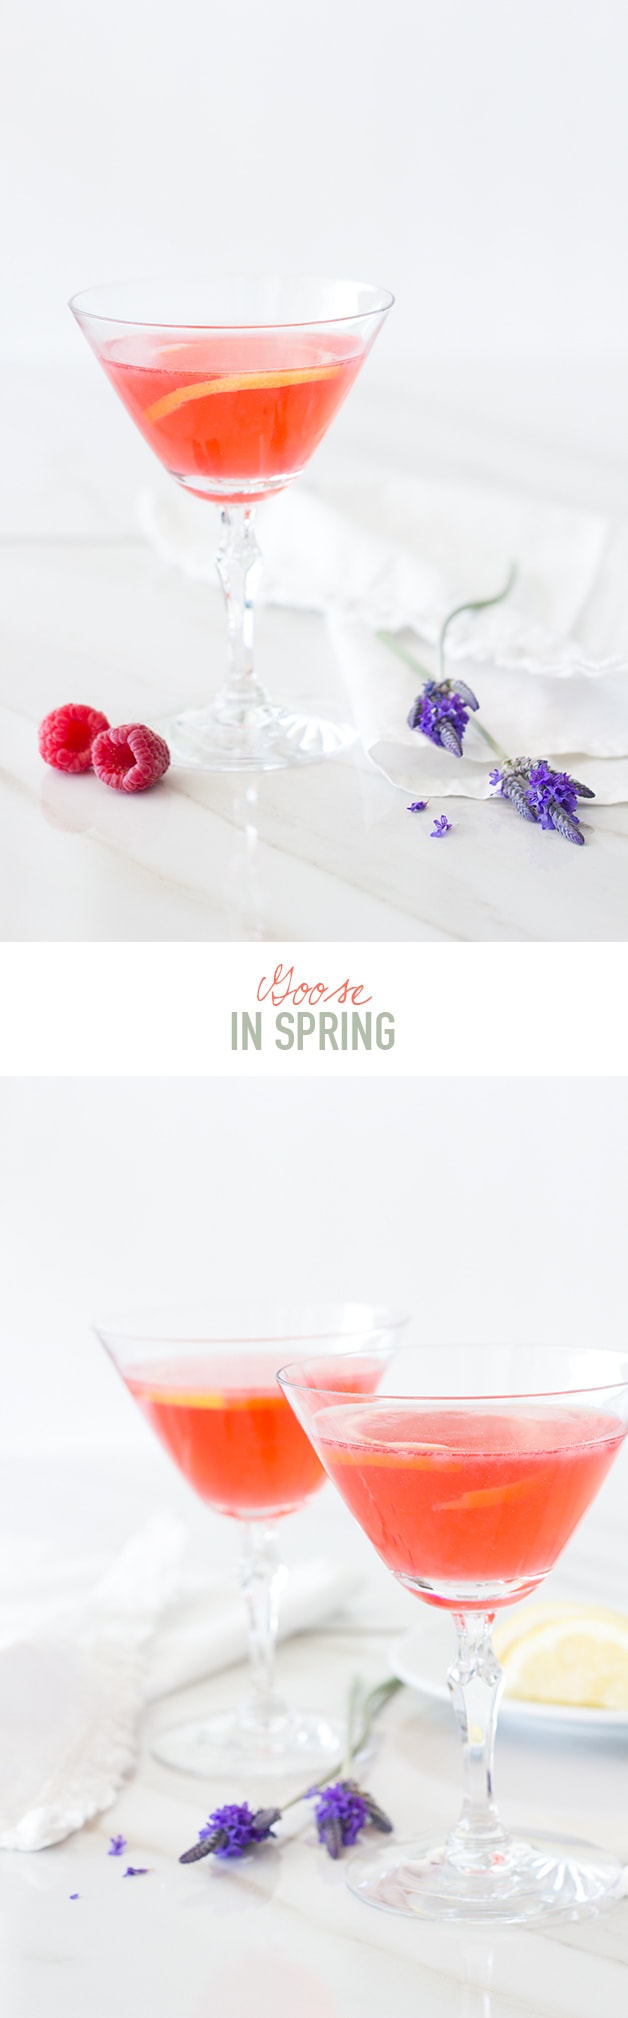 Goose in Spring - Lavender-infused vodka mingles with lemon, raspberry, and elderflower to create this refreshing spring cocktail. | www.brighteyedbaker.com